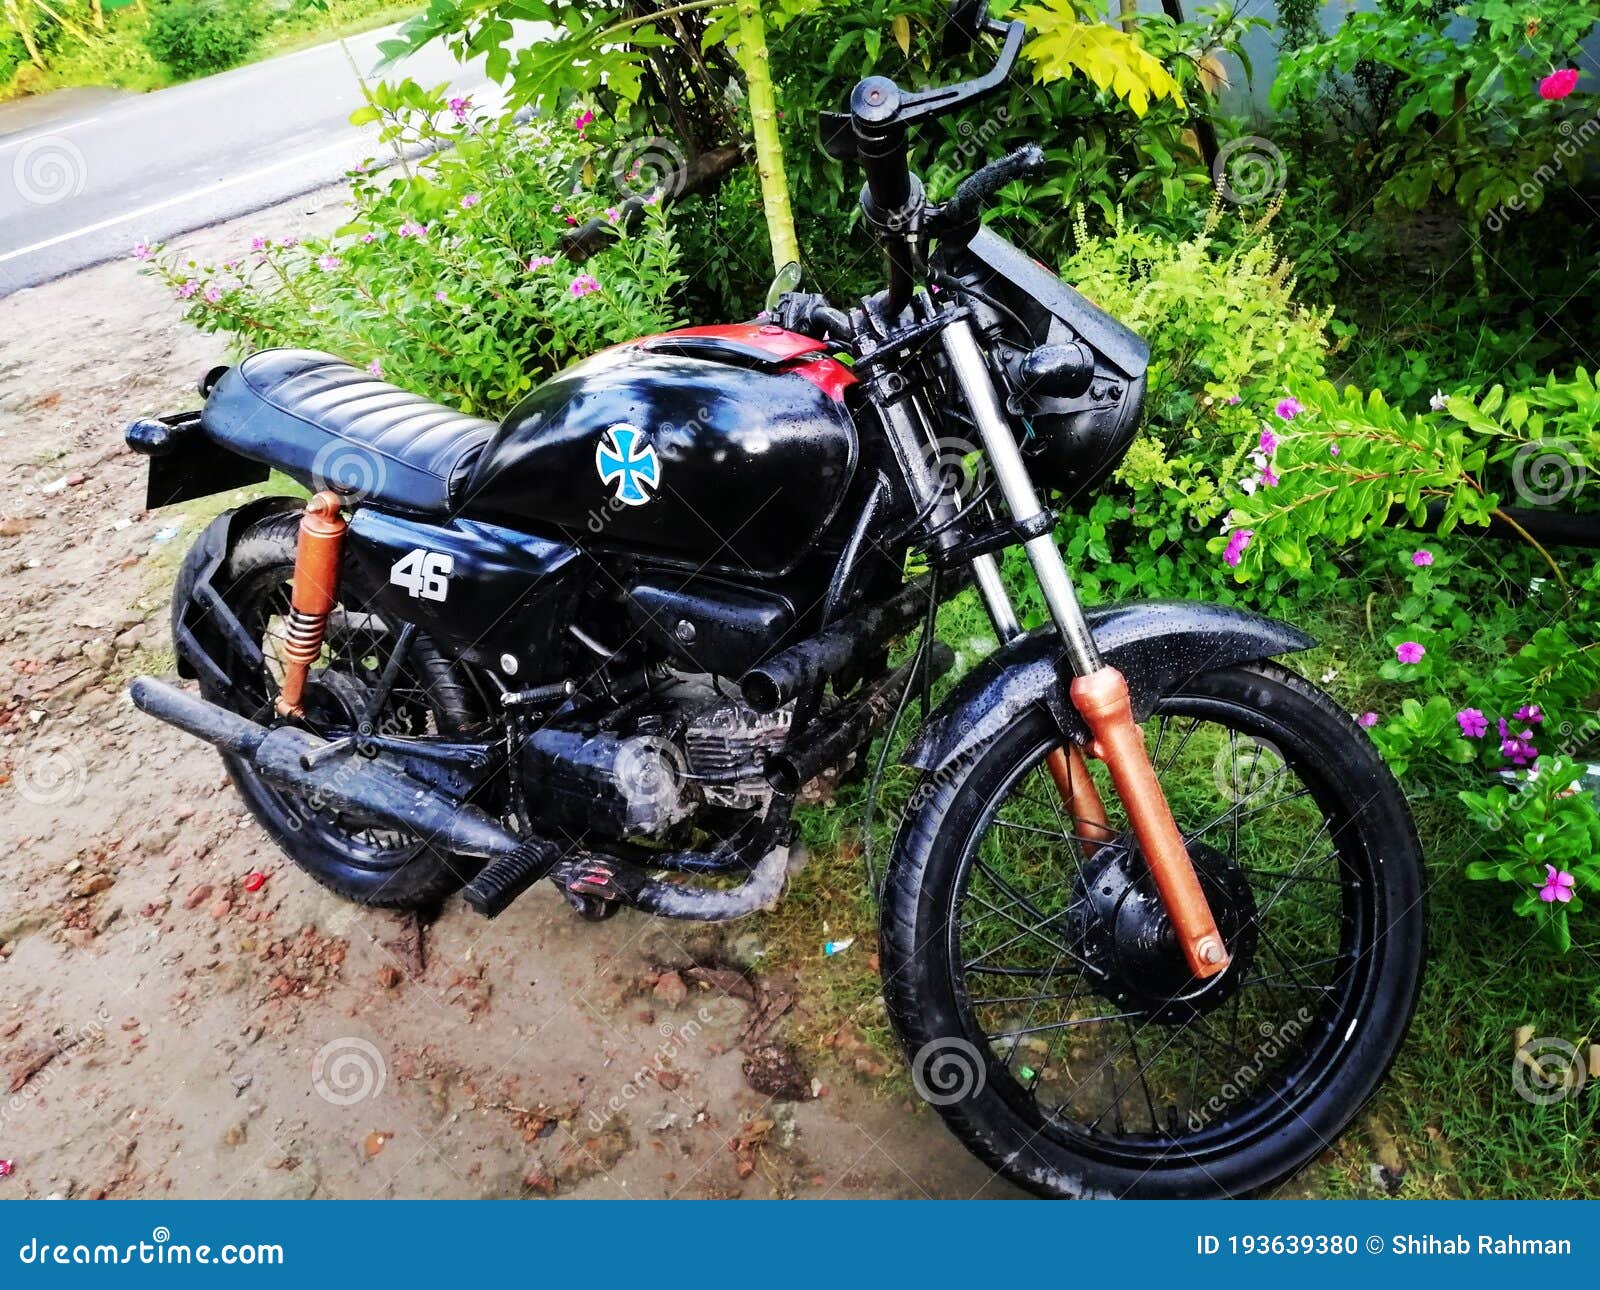 Modified Motorcycle Hero Honda In Bangladesh Editorial Image Image Of Motorcycle Honda